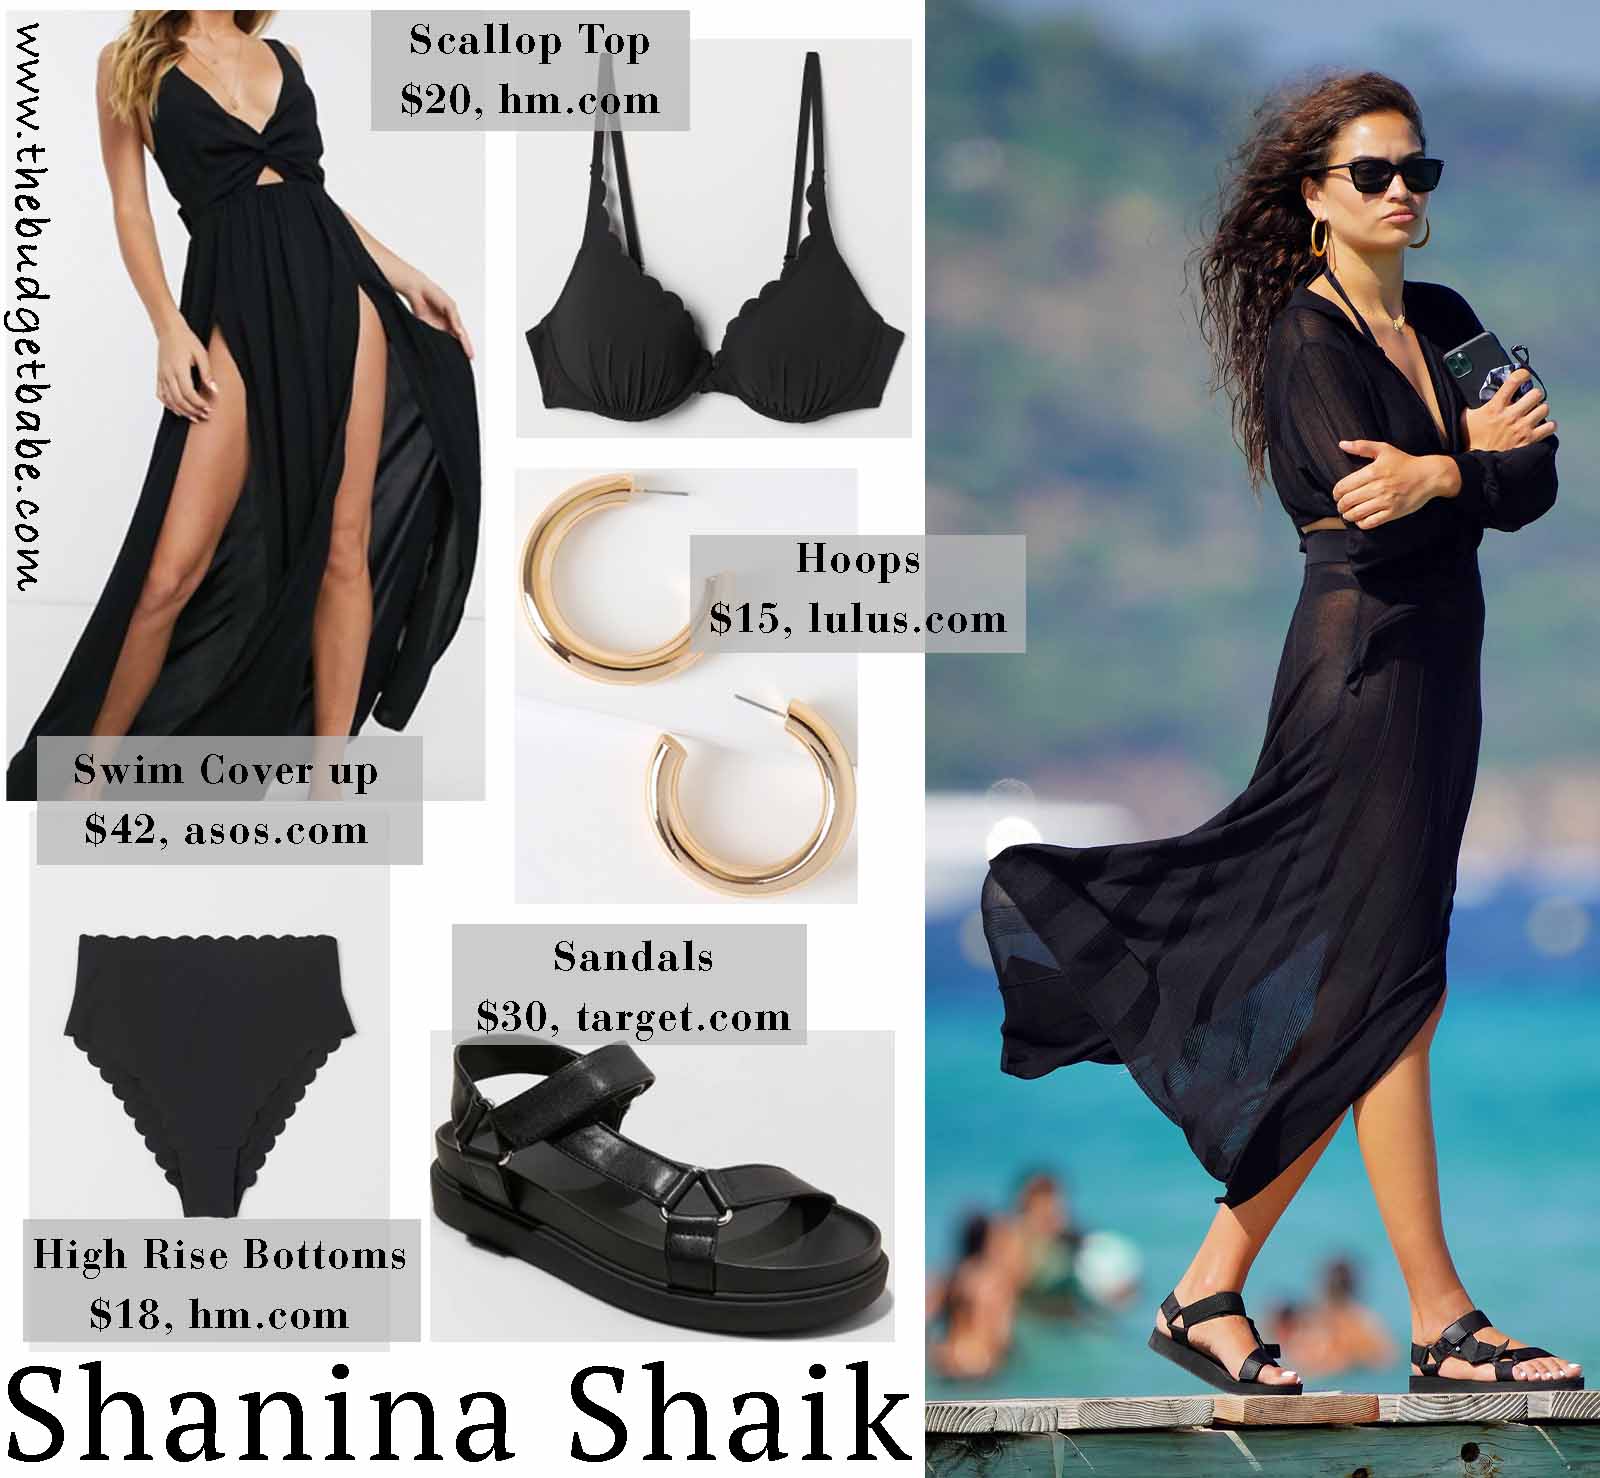 Shanina Shaik has serious poolside style!